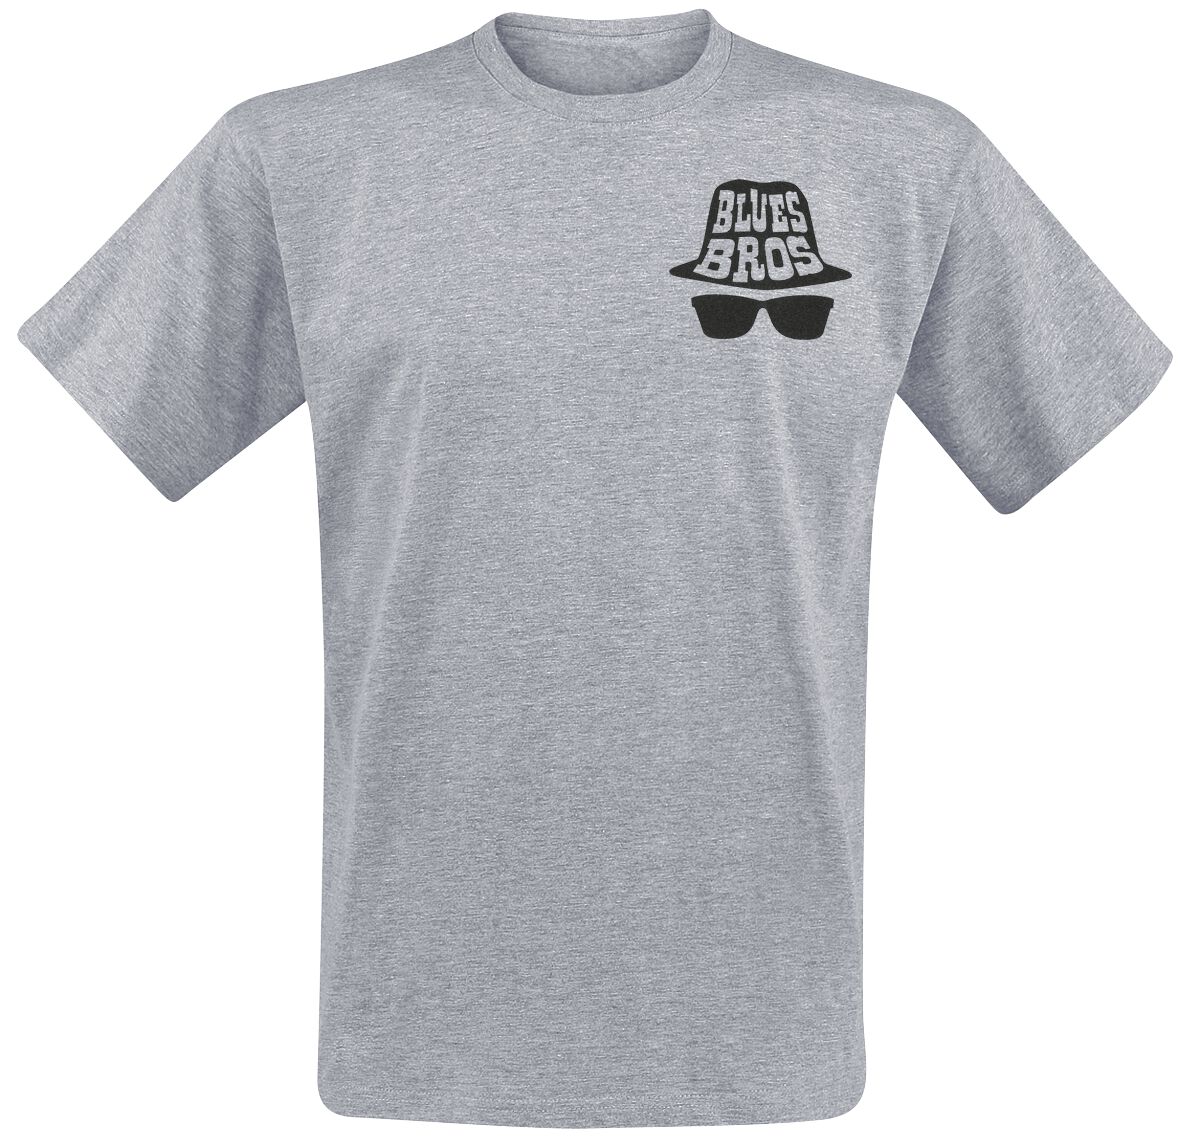 Blues Brothers Blues Bros T-Shirt grey